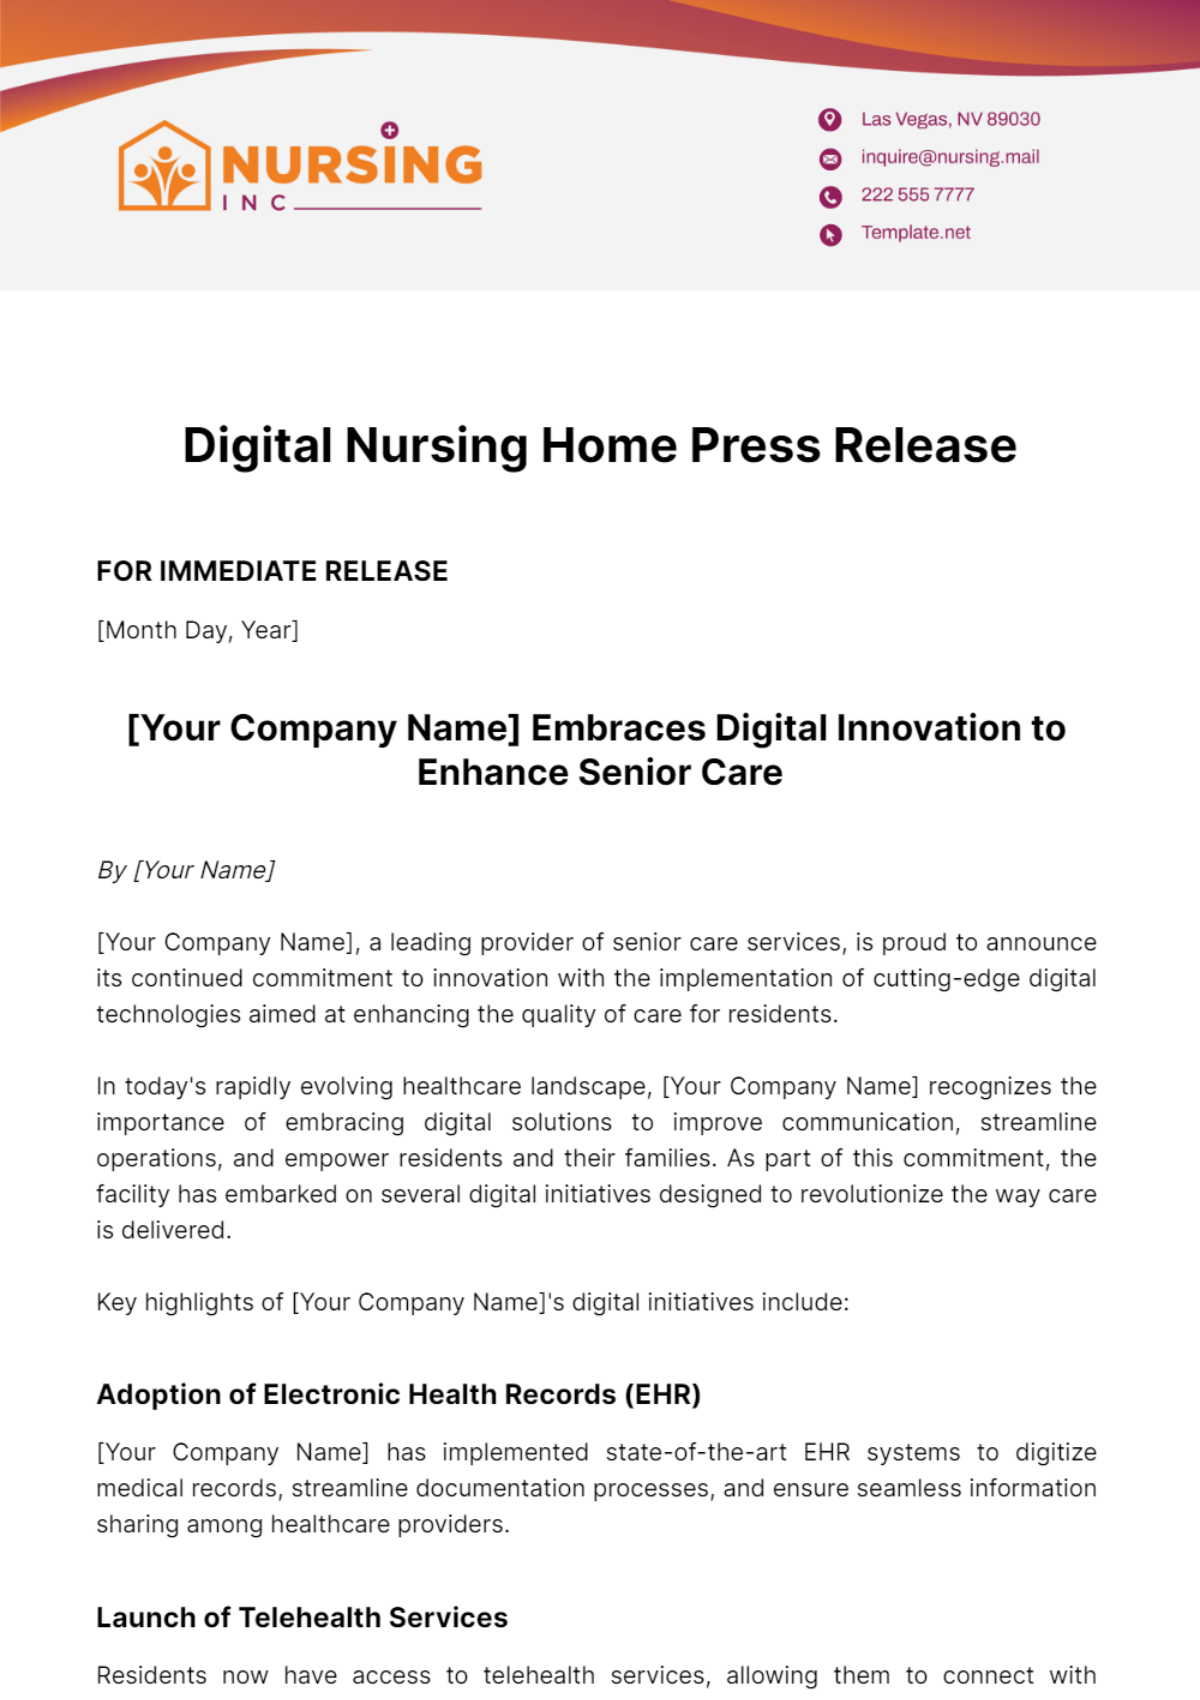 Digital Nursing Home Press Release Template